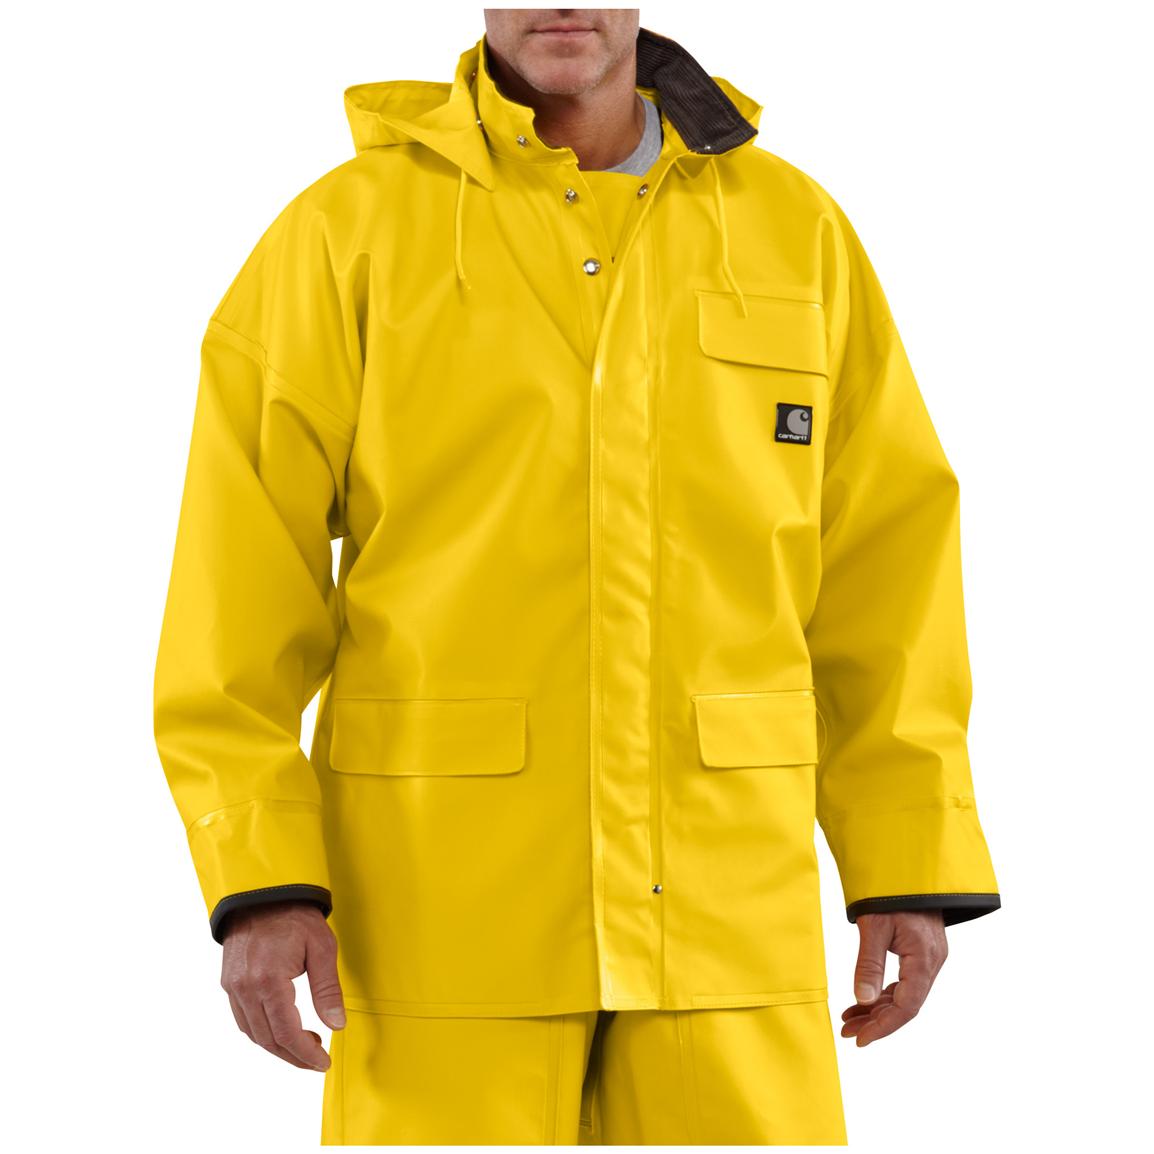 How to Choose Perfect Rain Coat - StyleSkier.com